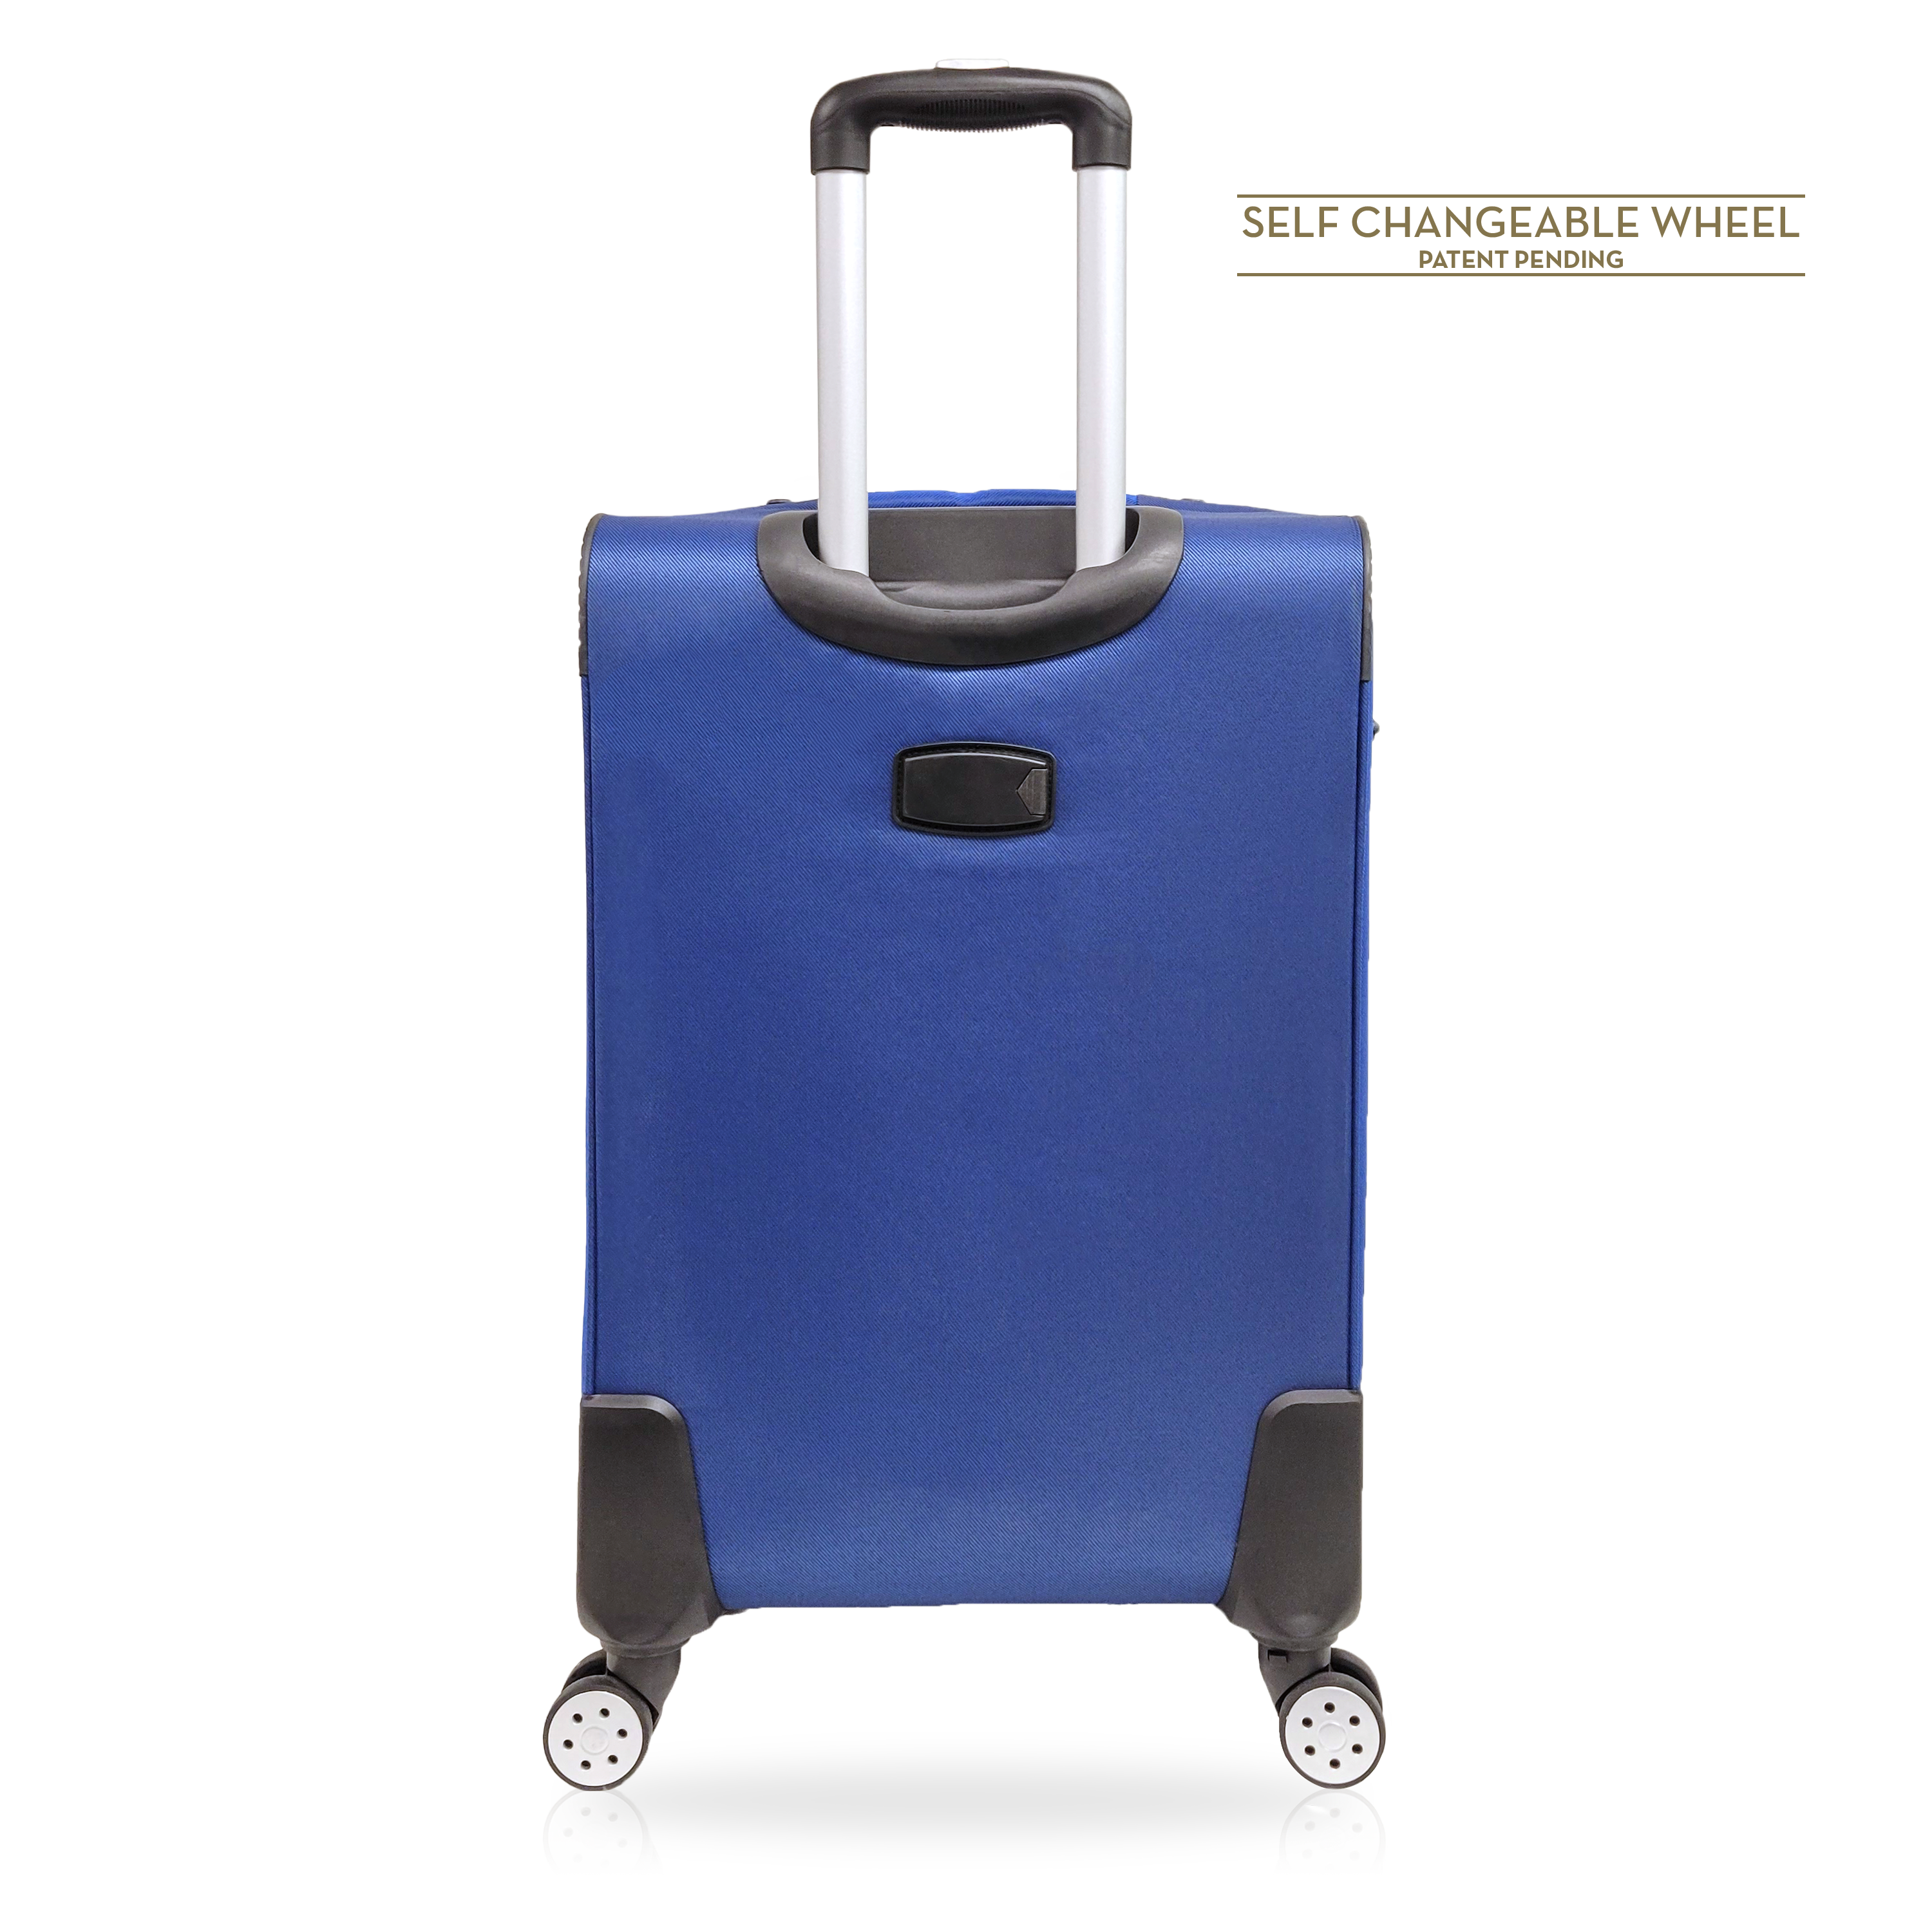 TUCCI Italy Salerno 30" Luggage Suitcase